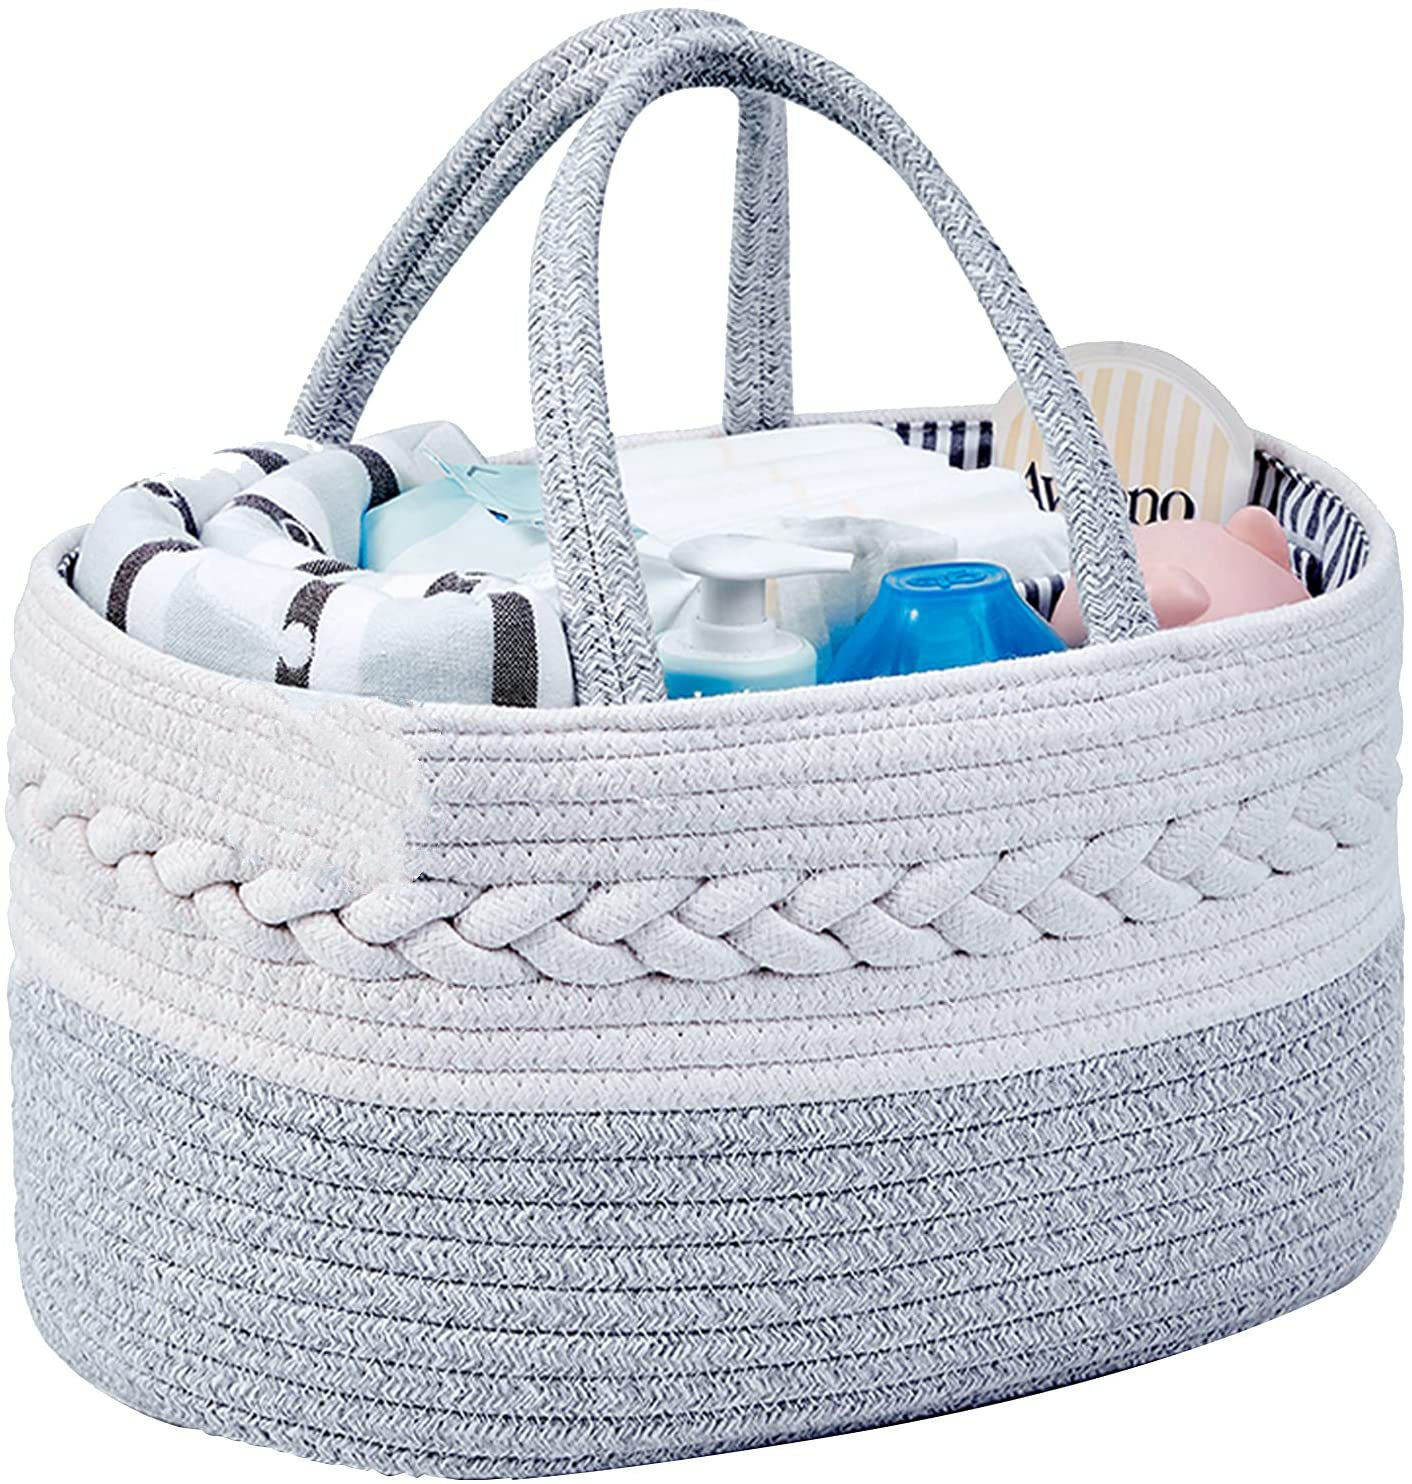 Baby Diaper Caddy Nursery Wipes Storage Bag Portable Basket Nappy Organizer Hot 